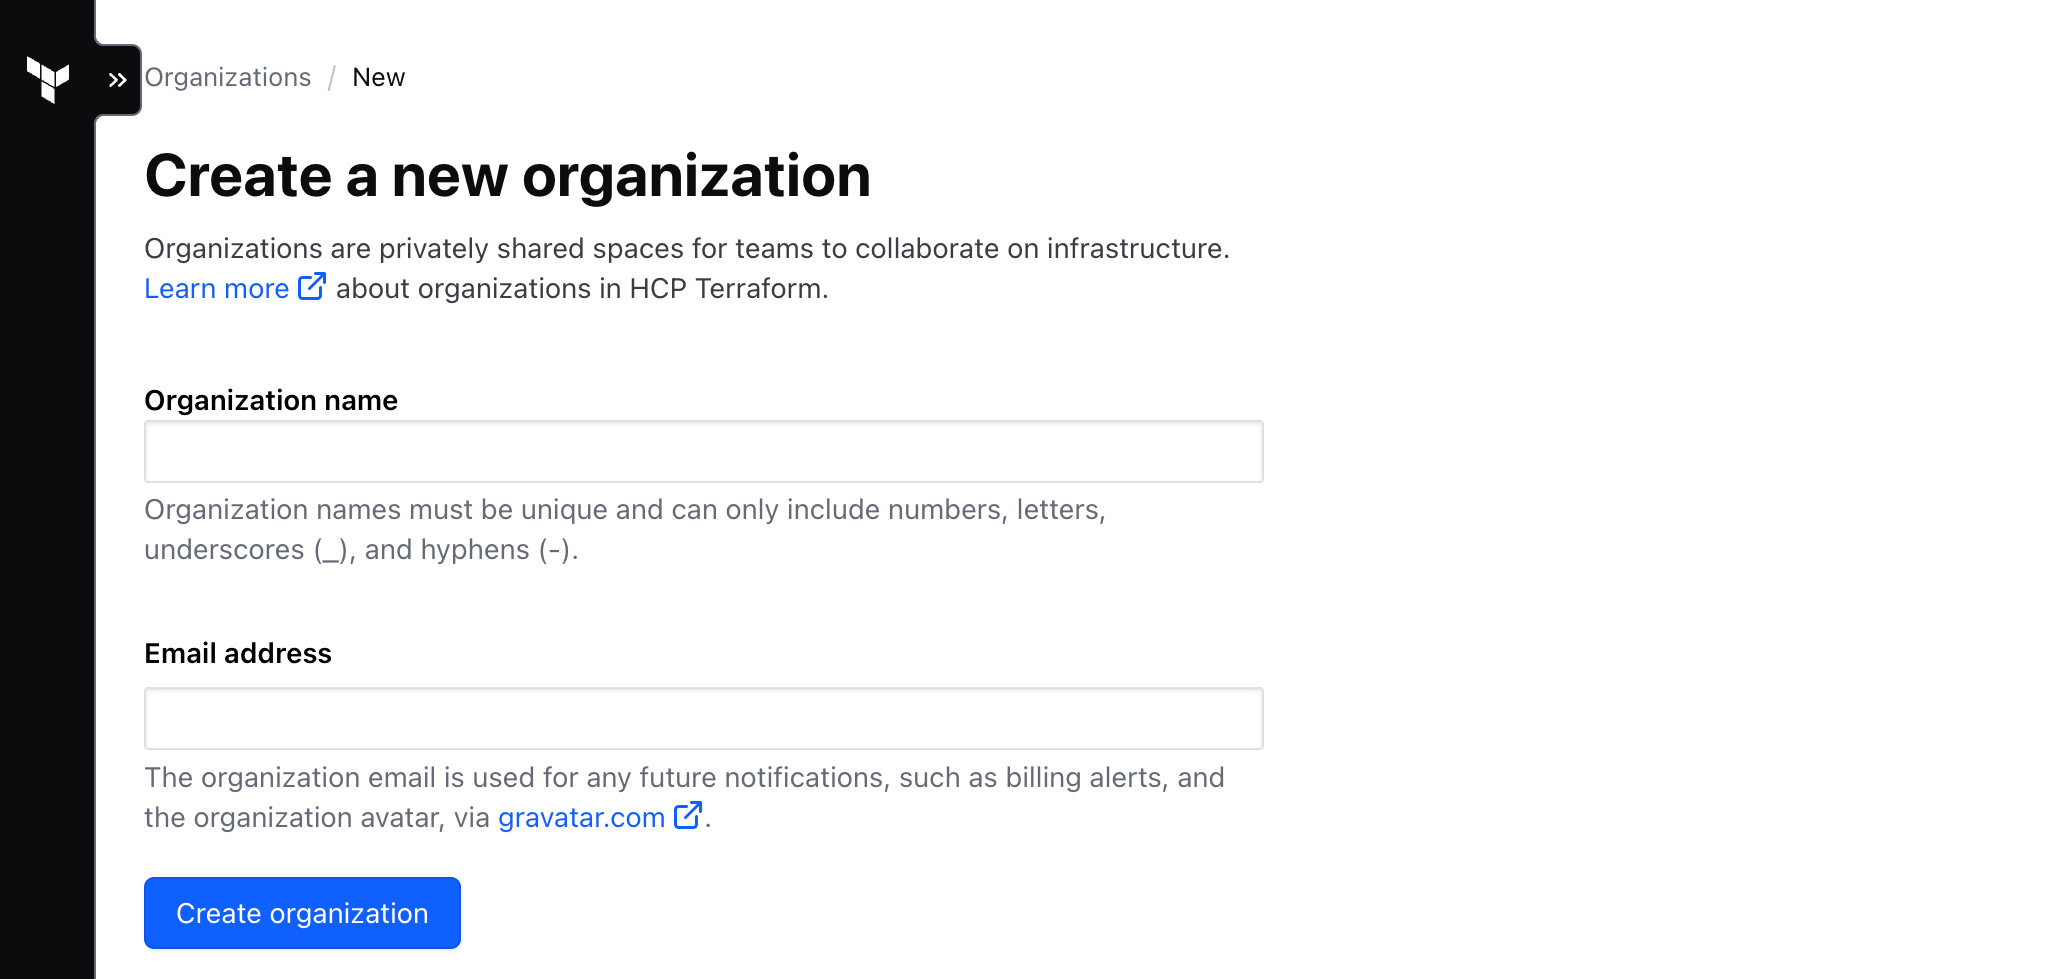 Create Organization